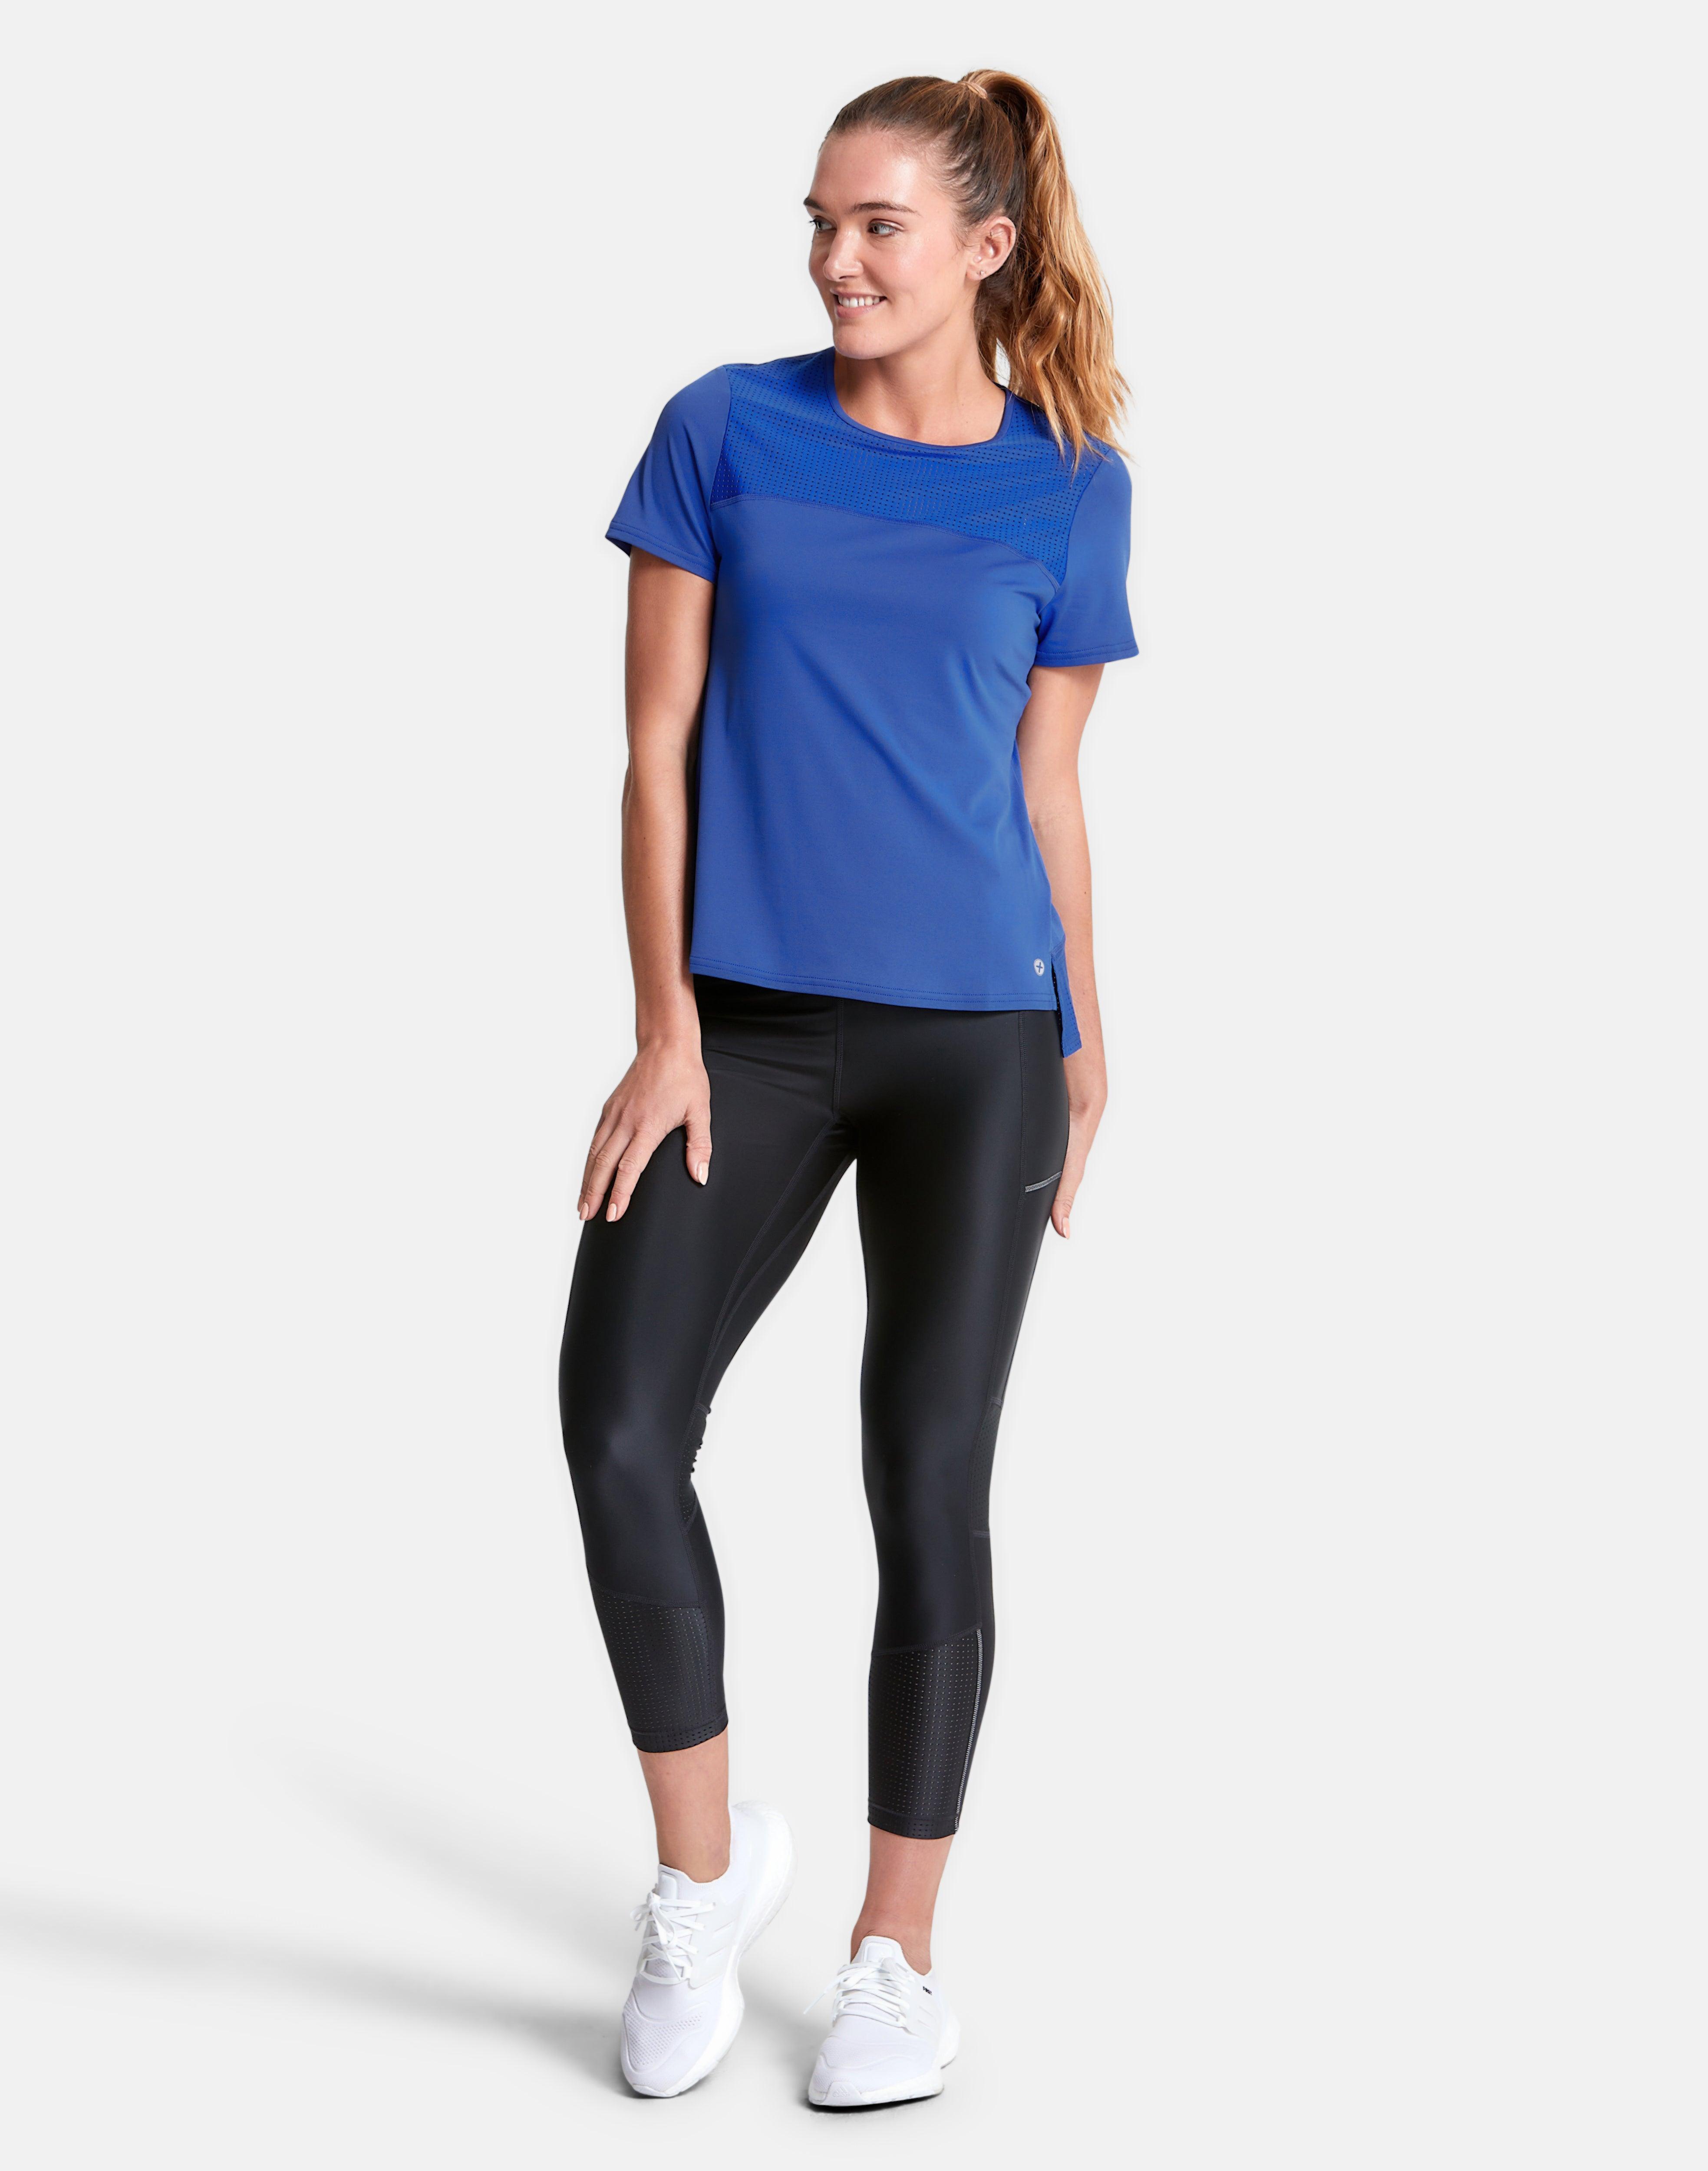 Celero Tee in Earth Blue - T-Shirts - Gym+Coffee